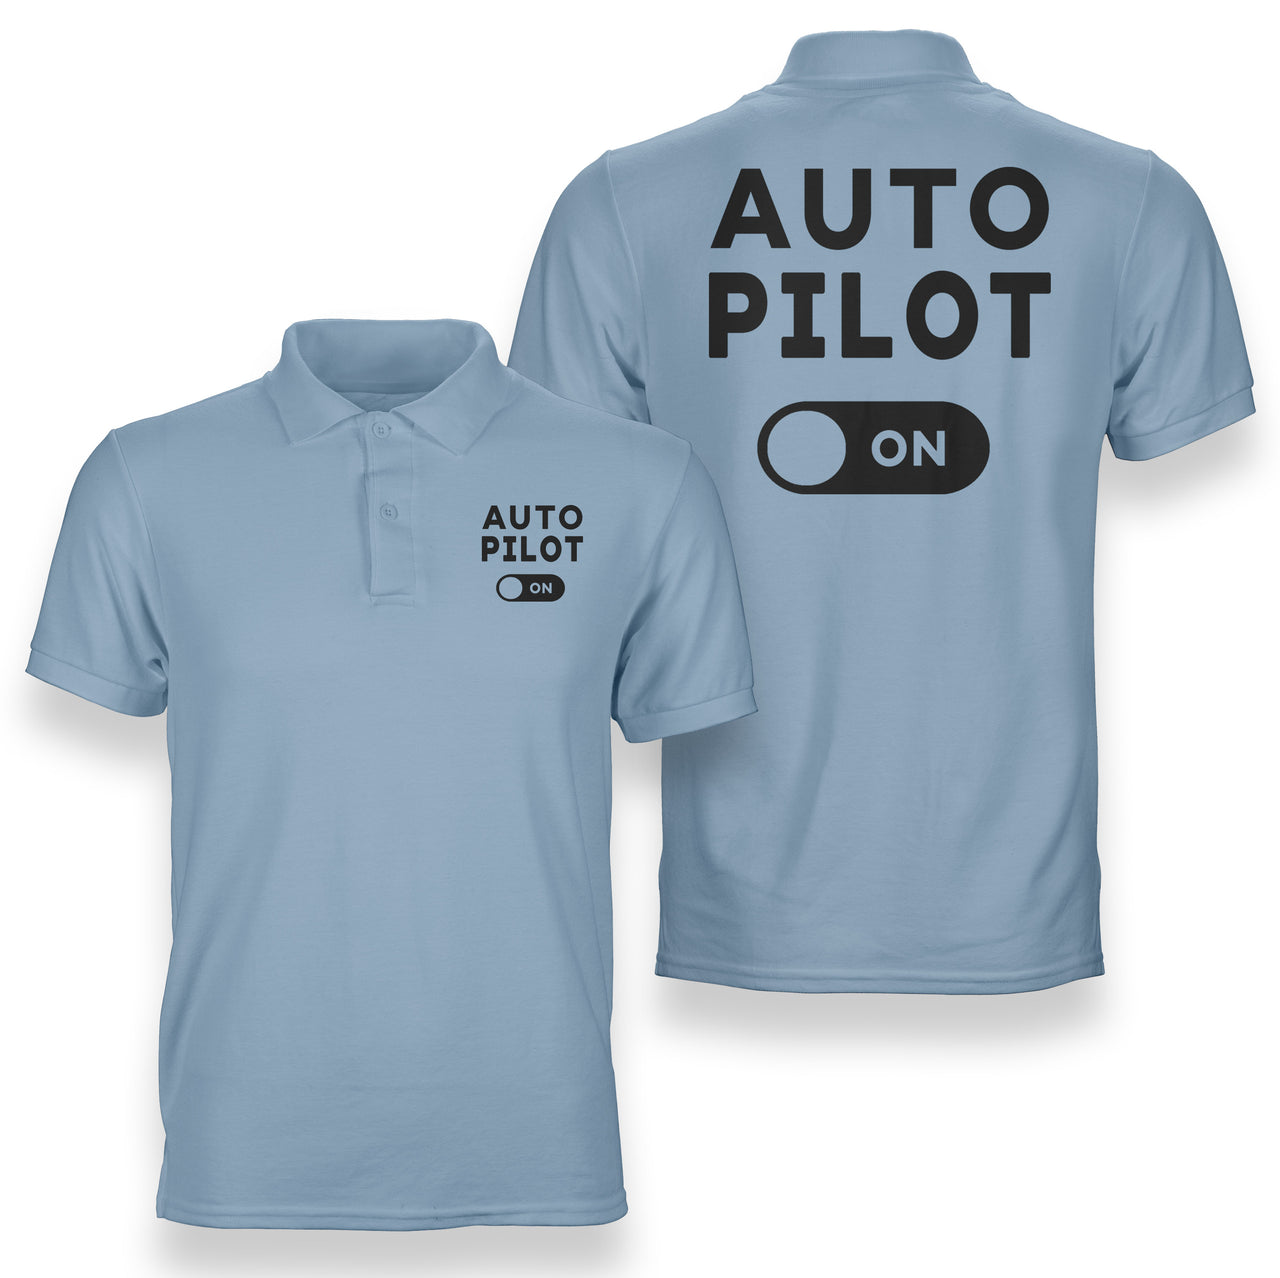 Auto Pilot ON Designed Double Side Polo T-Shirts